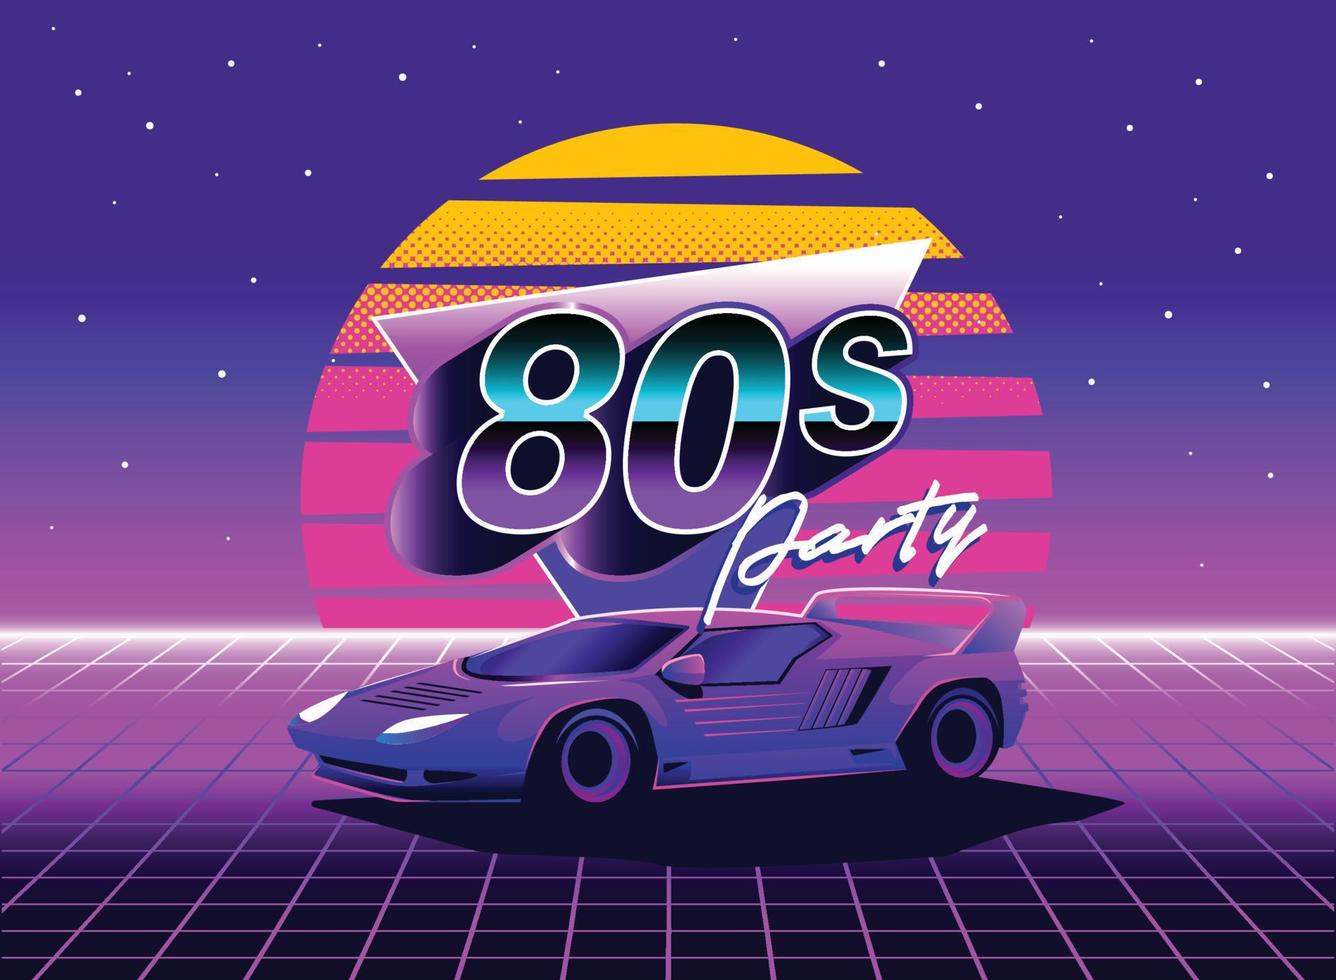 Retro 80s sci-fi futuristic style background with supercar. Vector retro futuristic synth wave illustration in 1980s posters style. Retro Nostalgic vaporwave cyberpunk artwork with vibrant neon colors